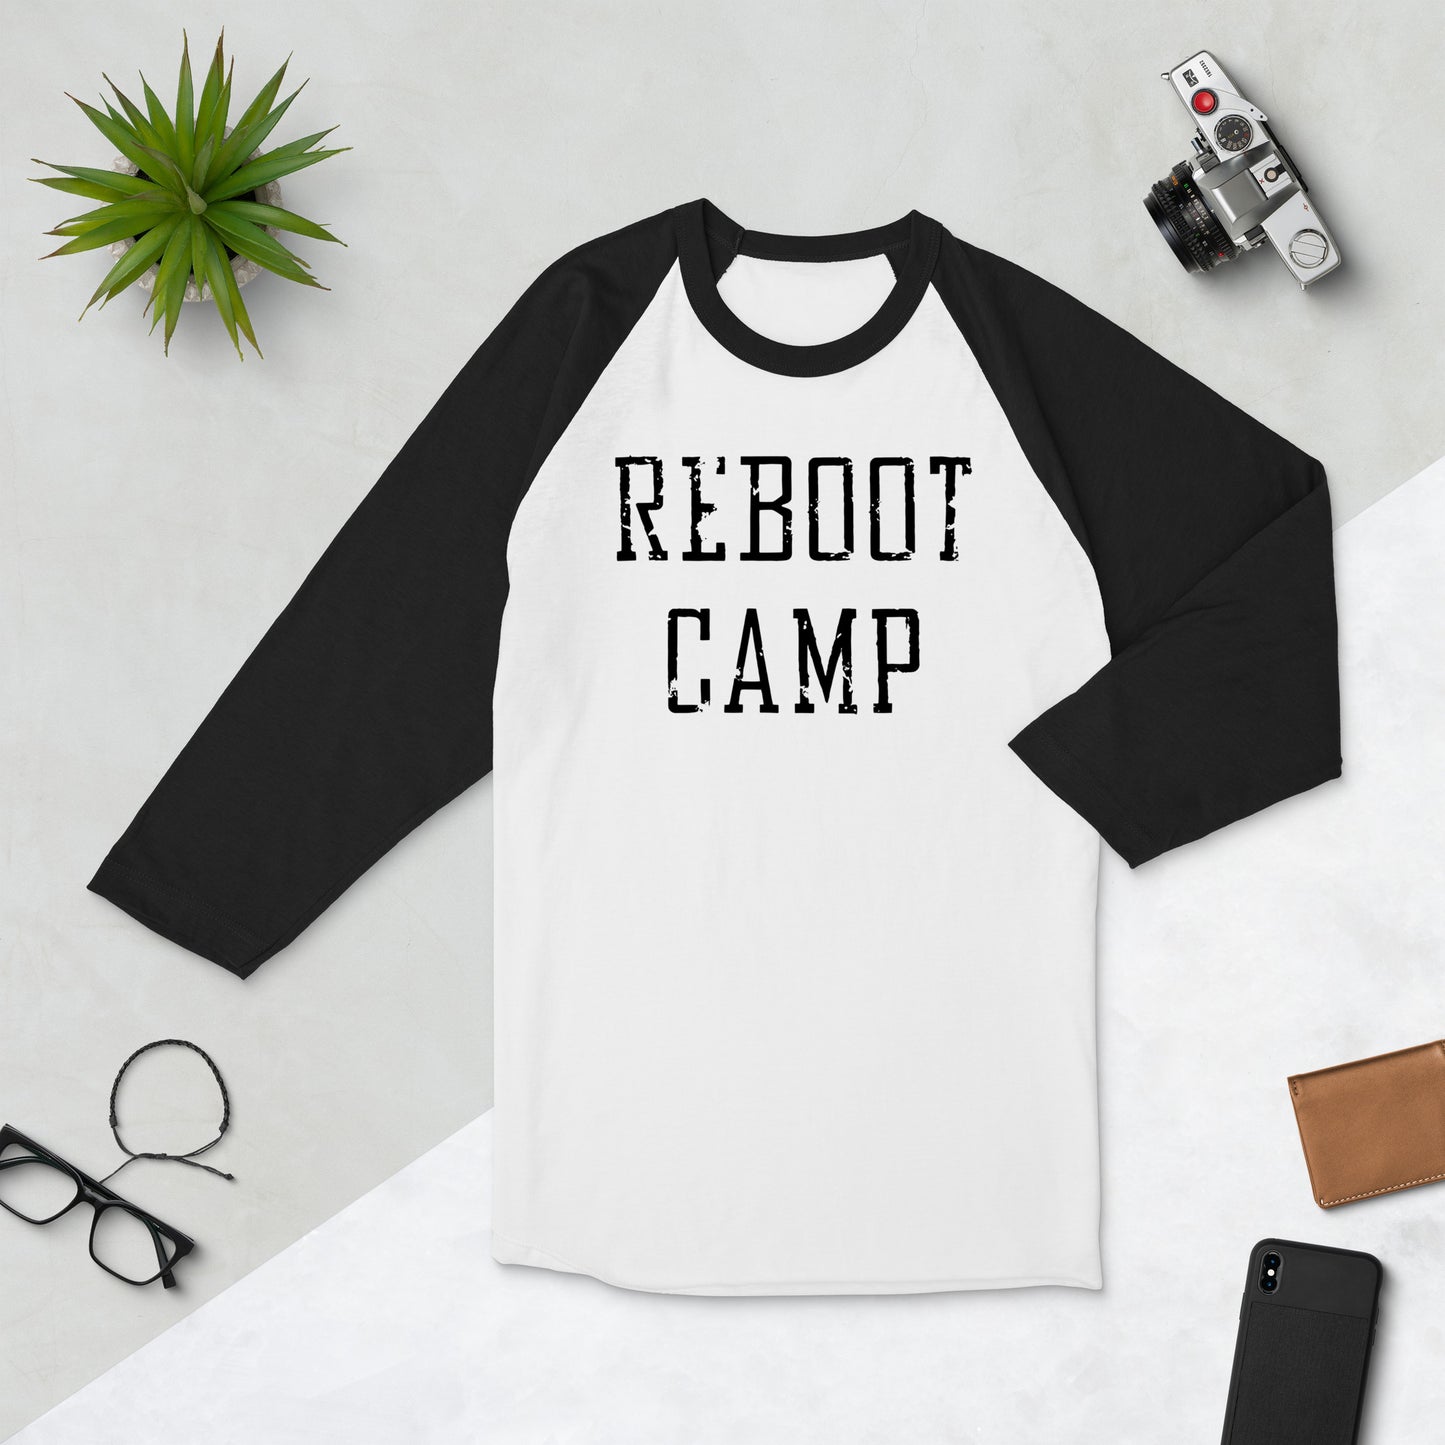 Reboot ¾6 - Reboot Camp 4 sleeve raglan shirt